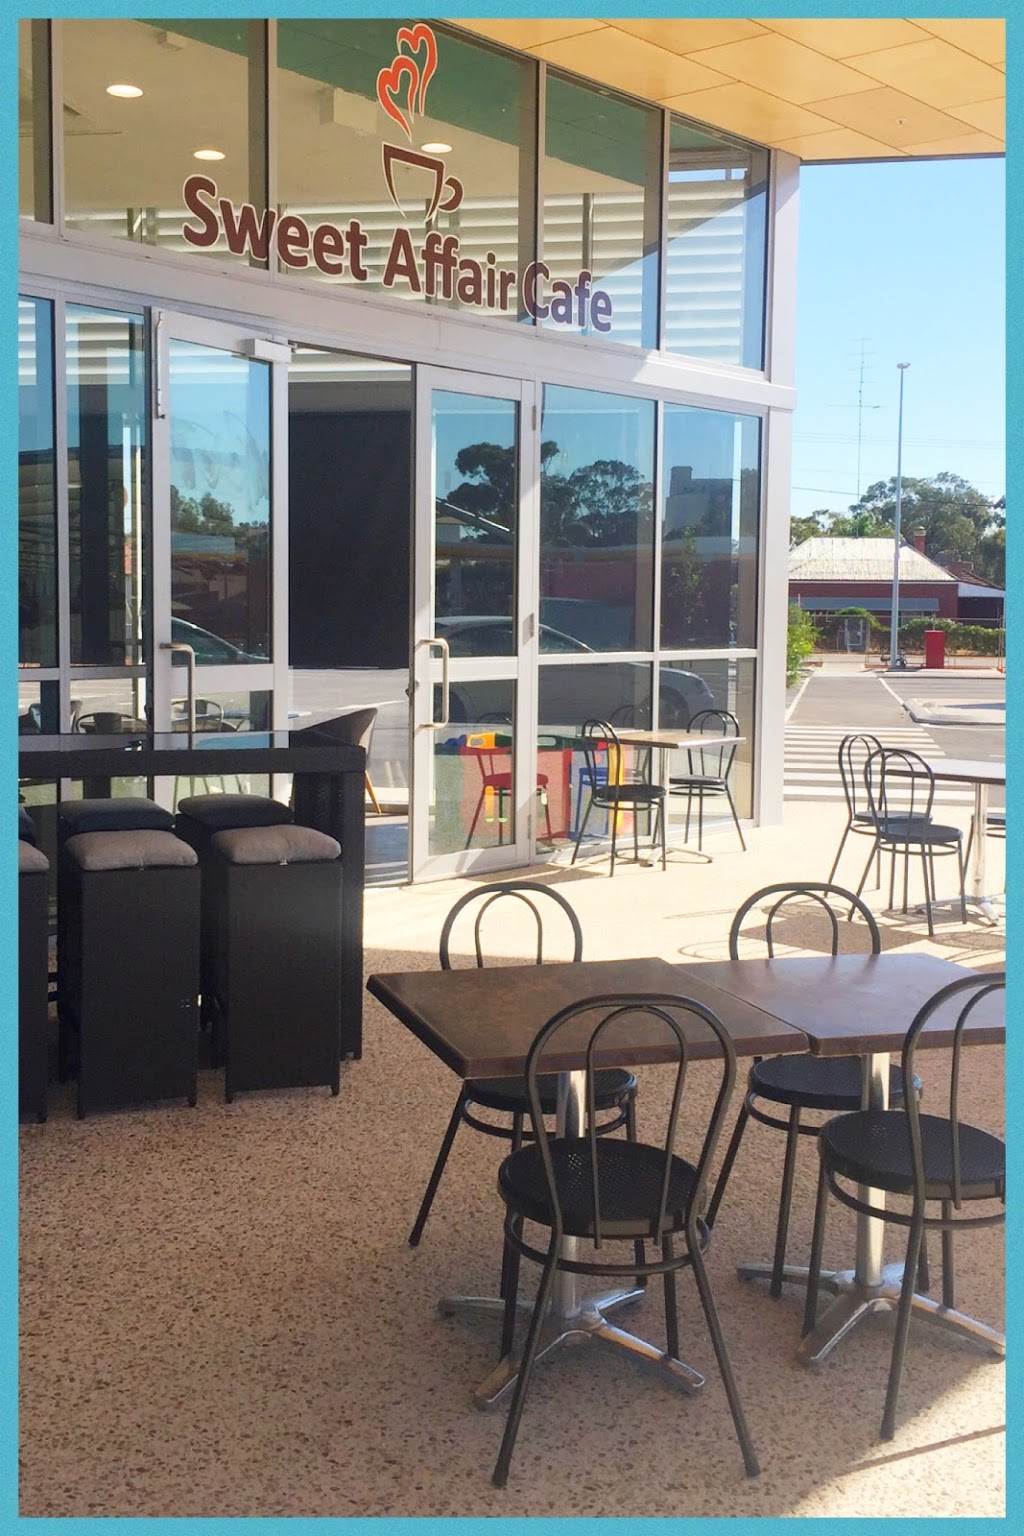 Sweet Affair Cafe | restaurant | 5/10 Beamish Ave, Northam WA 6401, Australia | 0423854145 OR +61 423 854 145